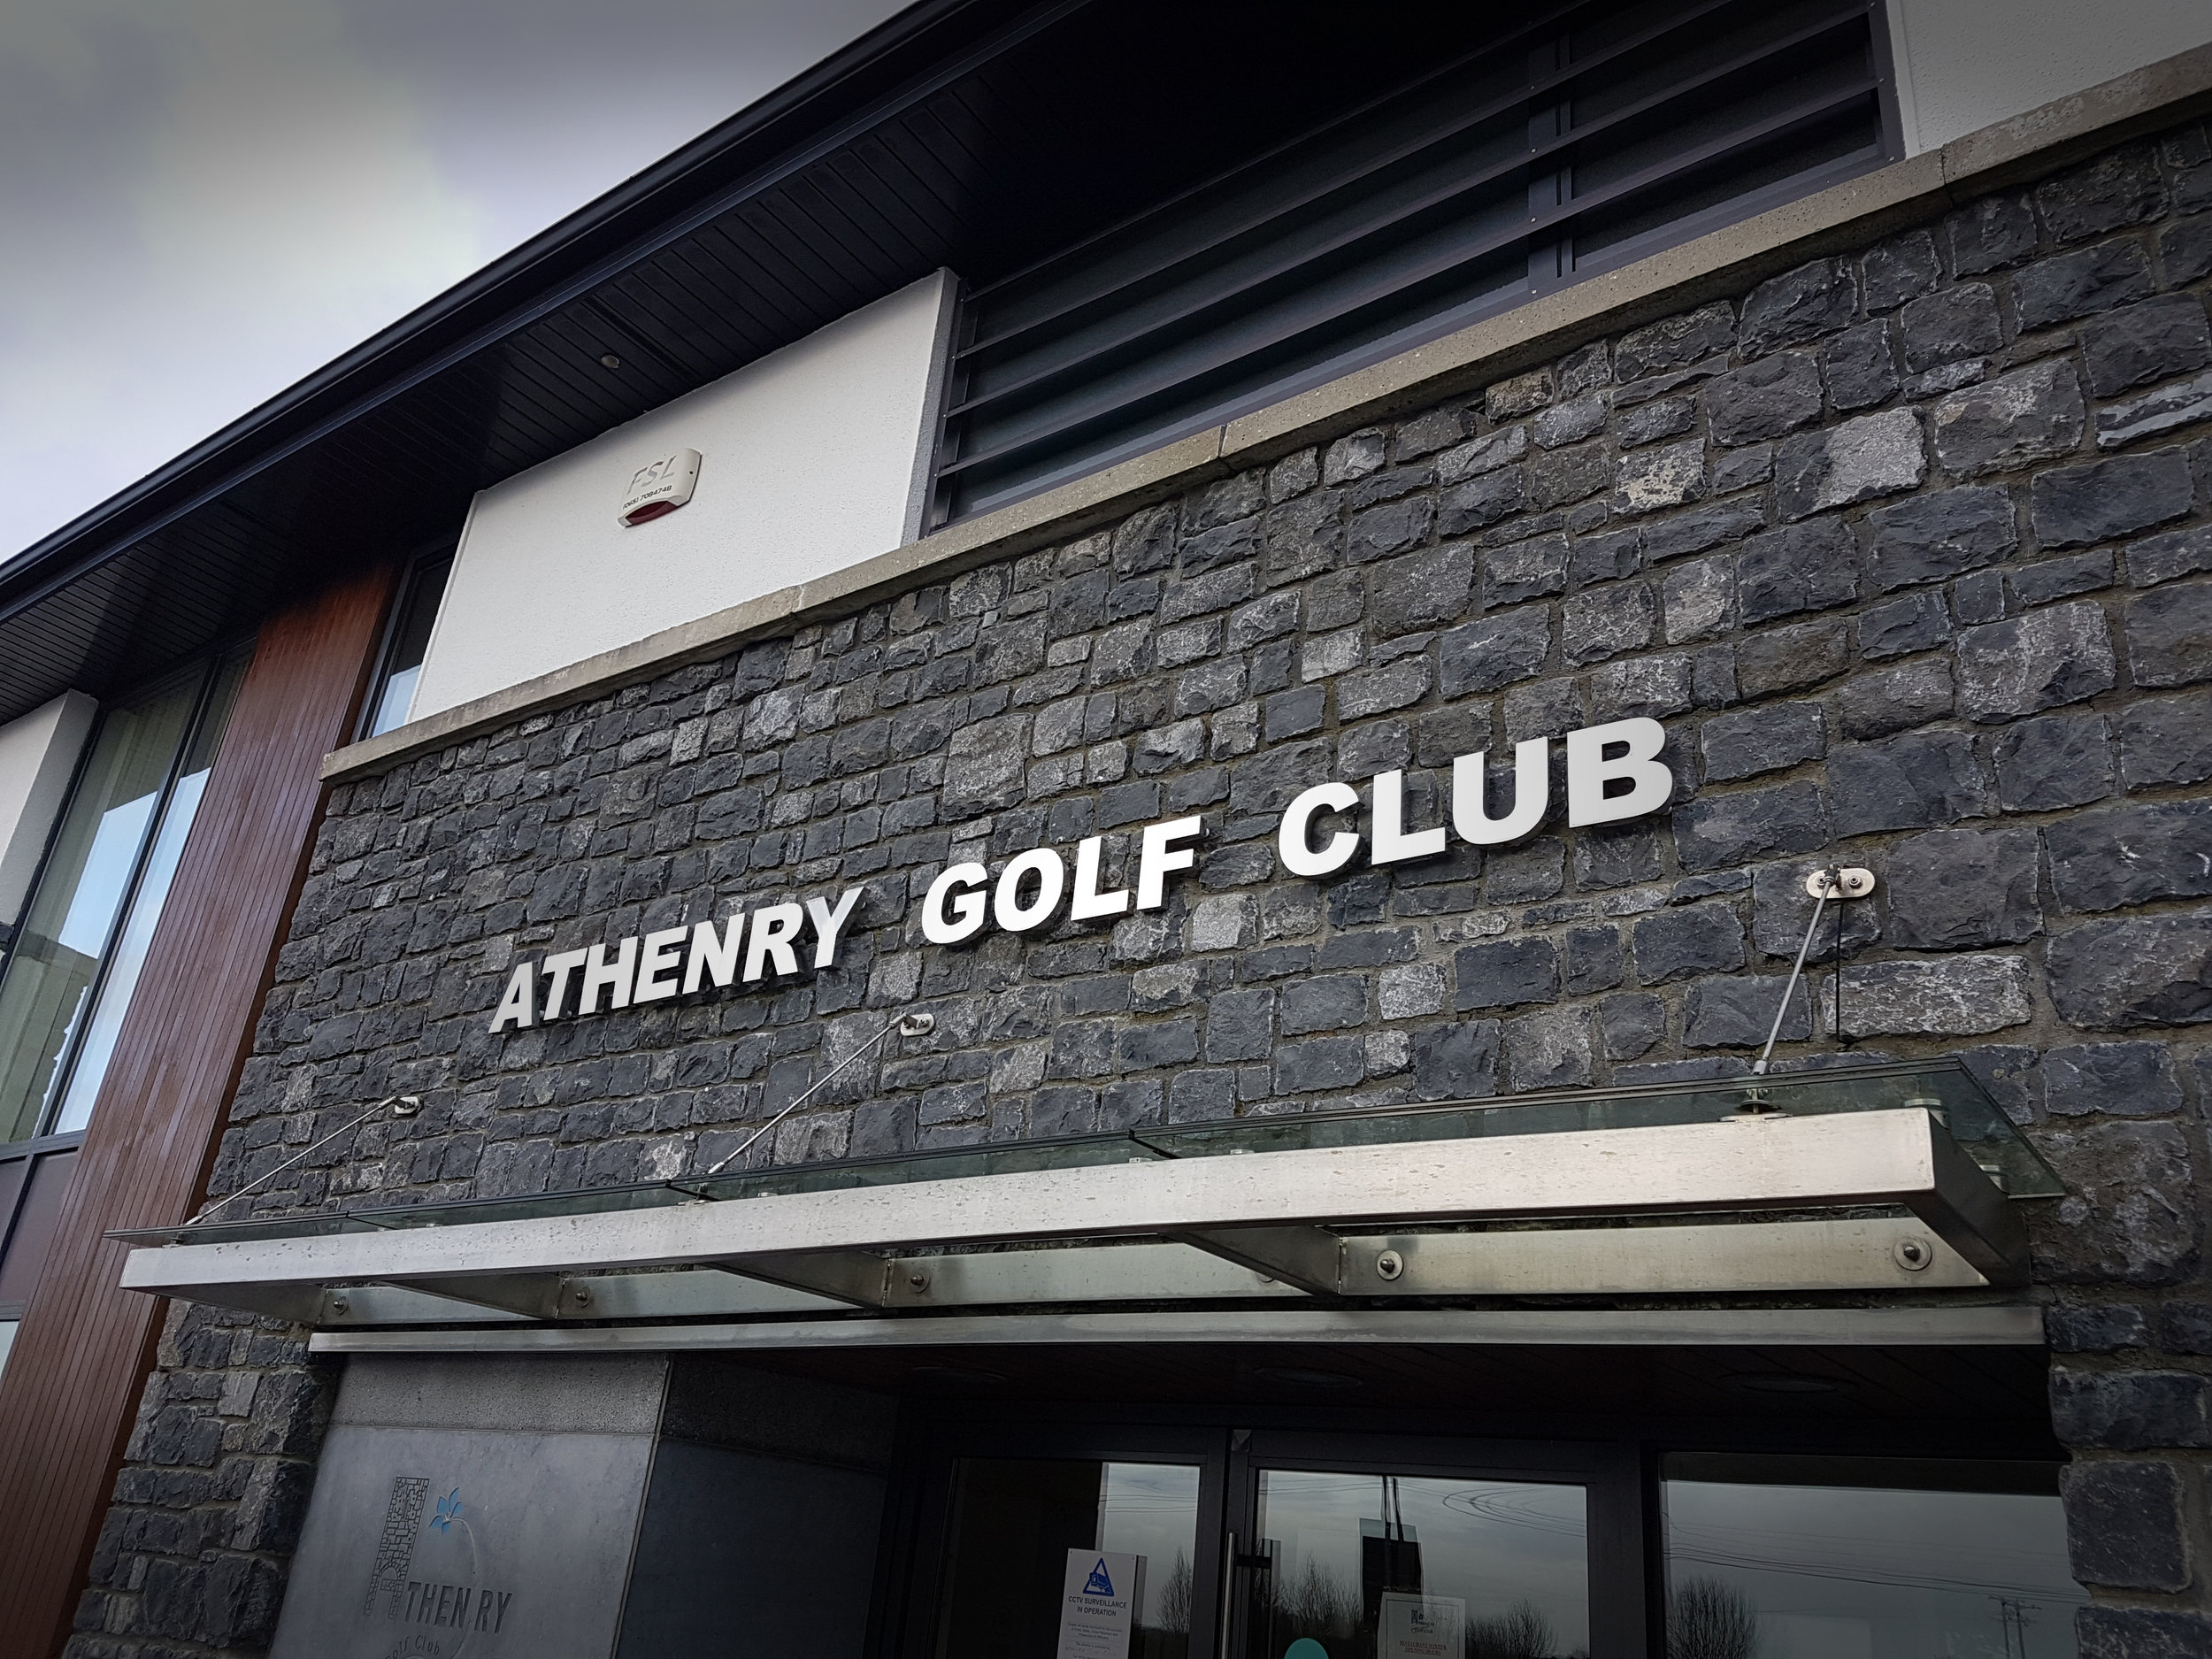 athenry golf club.jpg